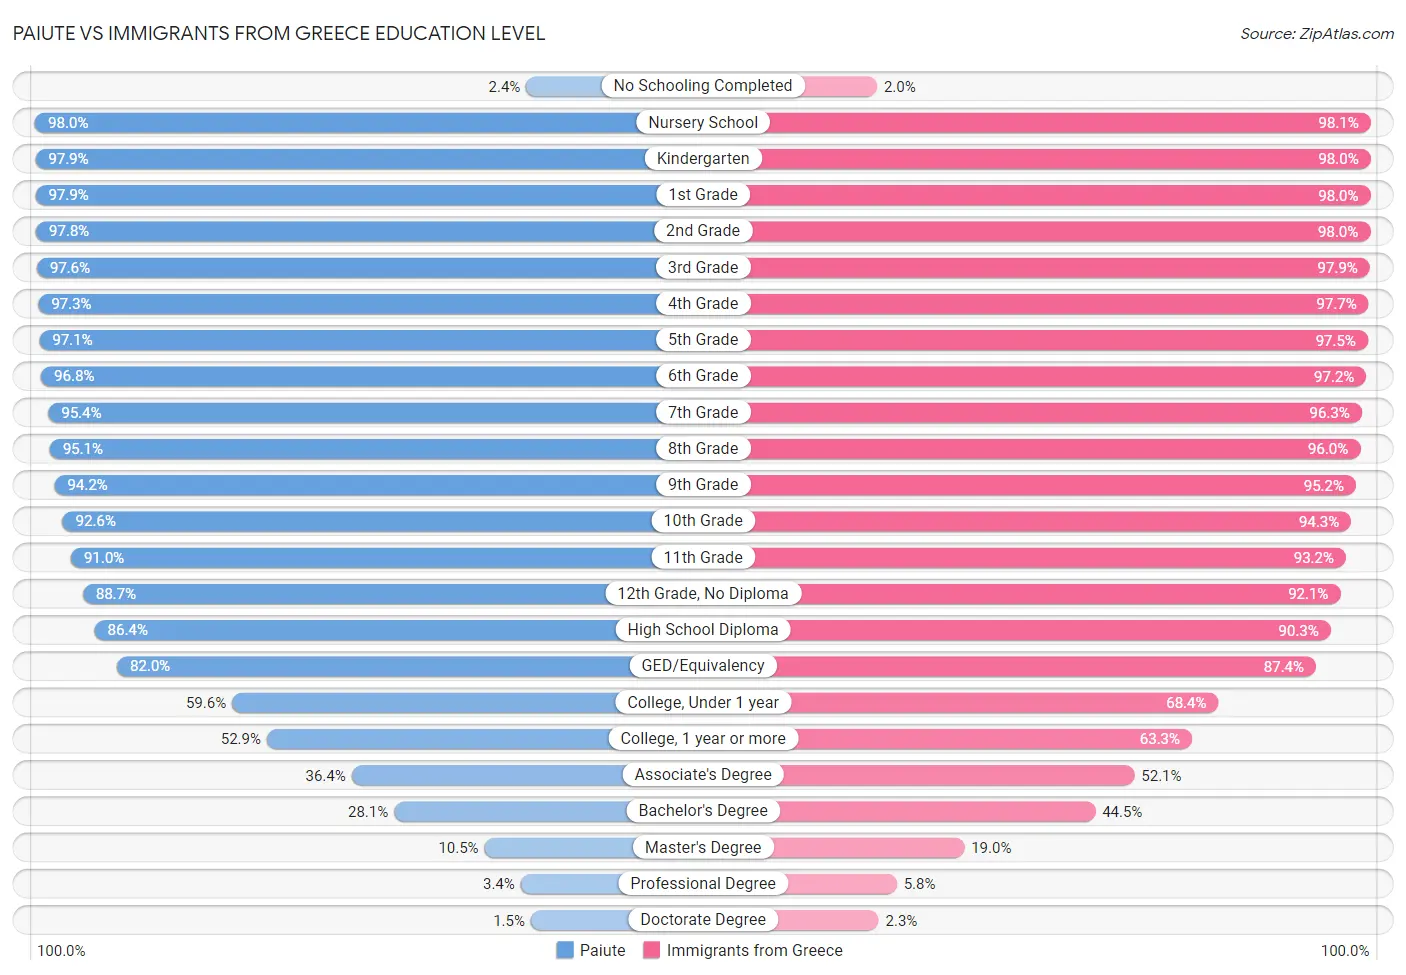 Paiute vs Immigrants from Greece Education Level